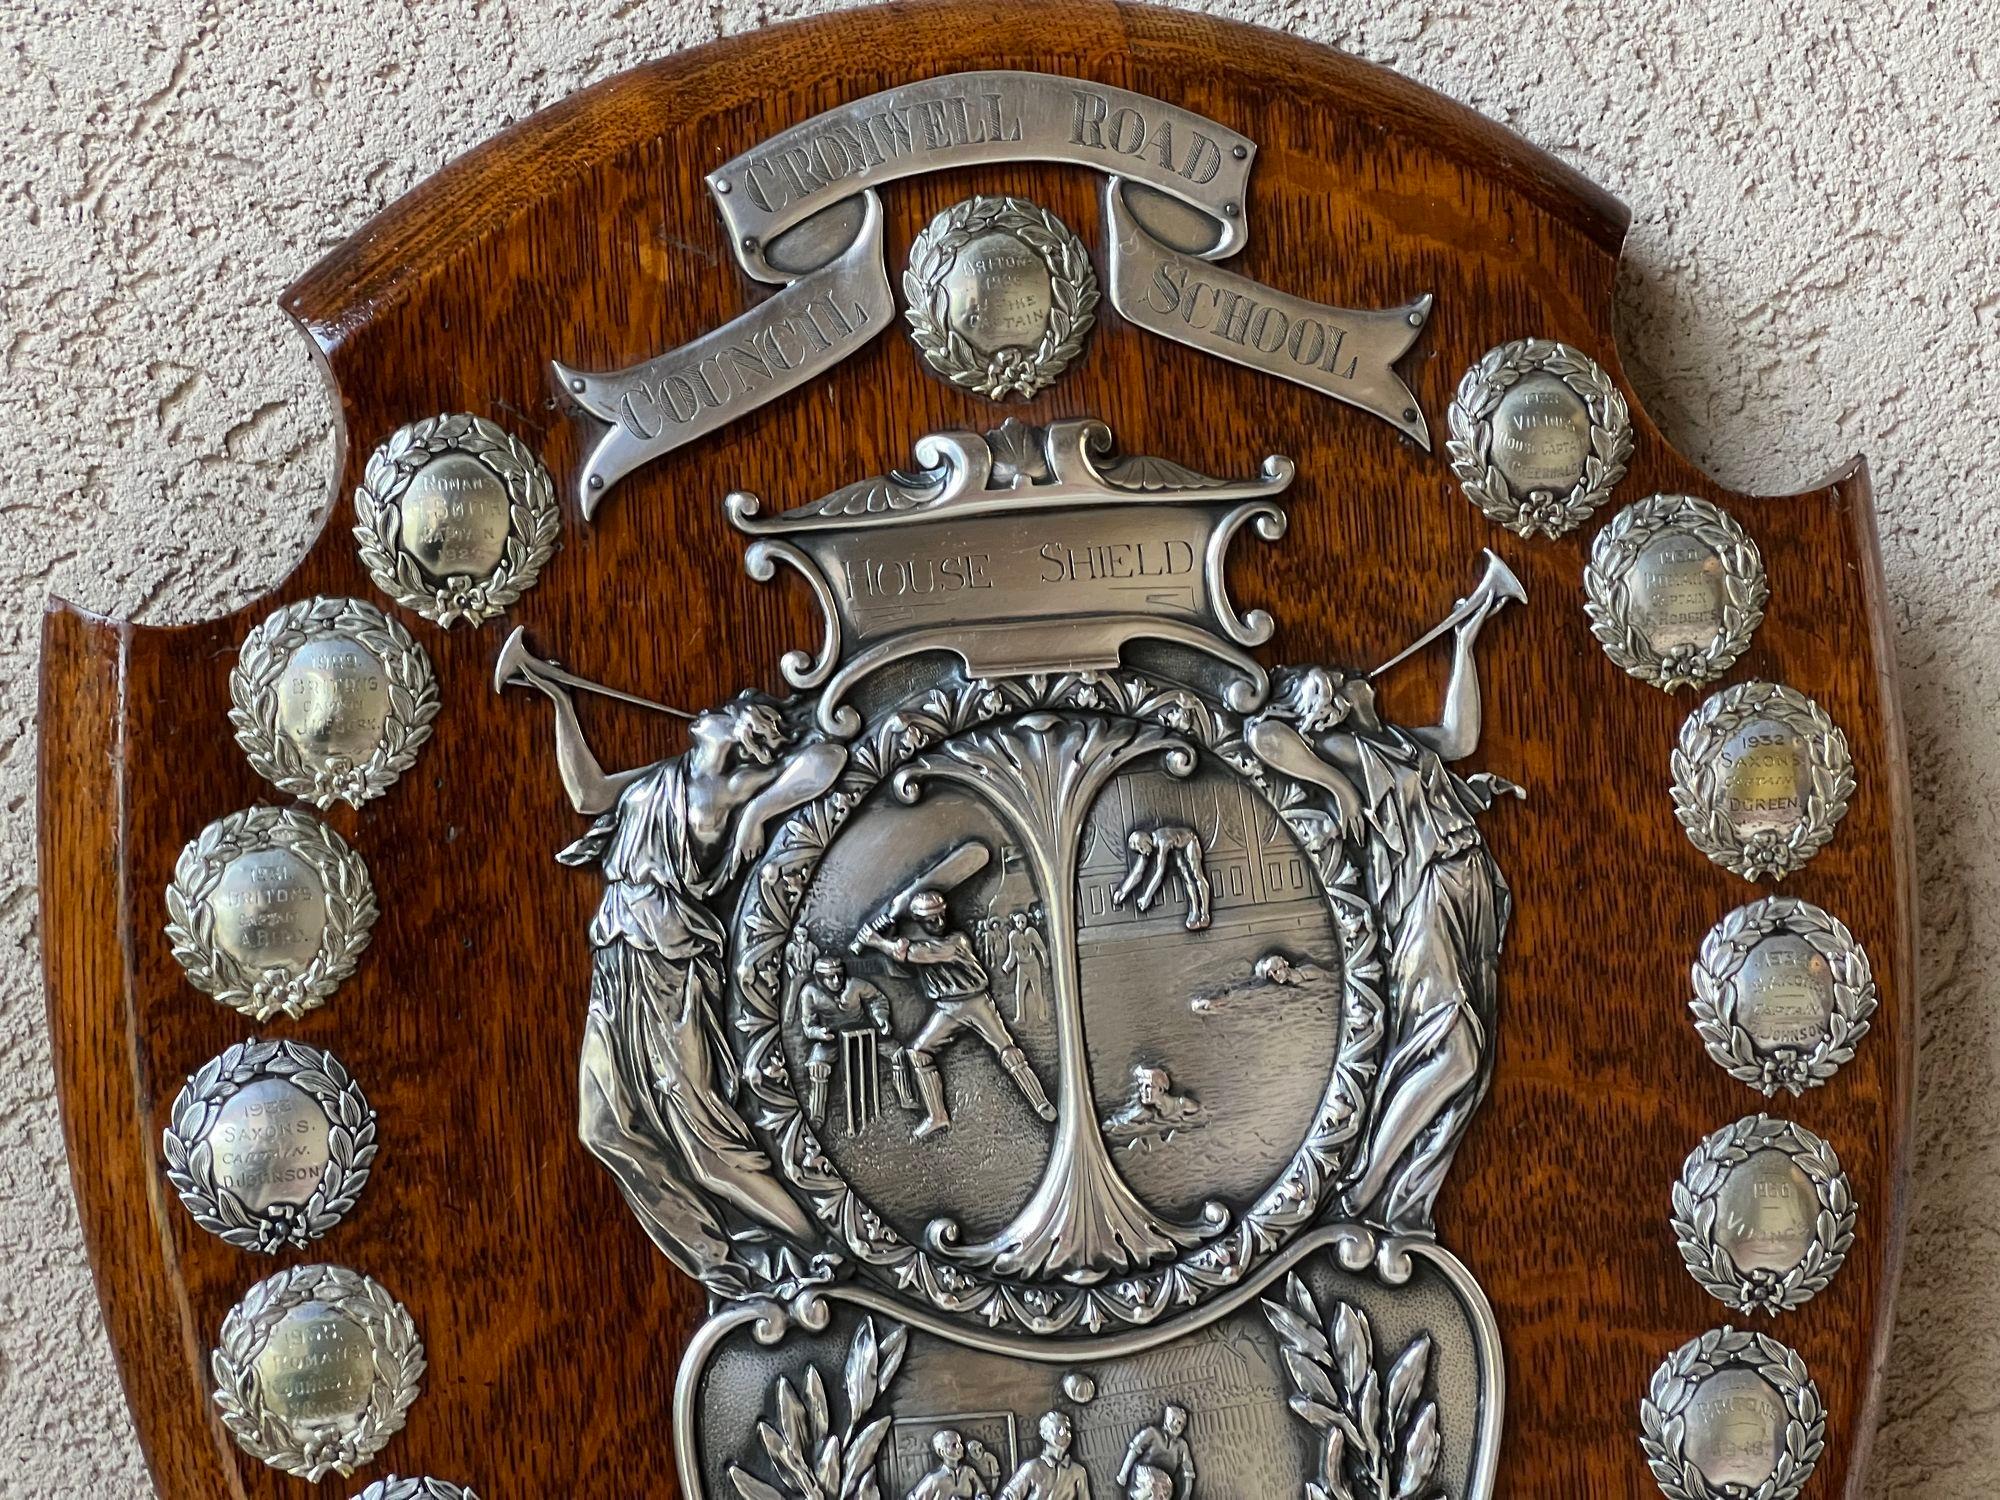 trophy shield plates